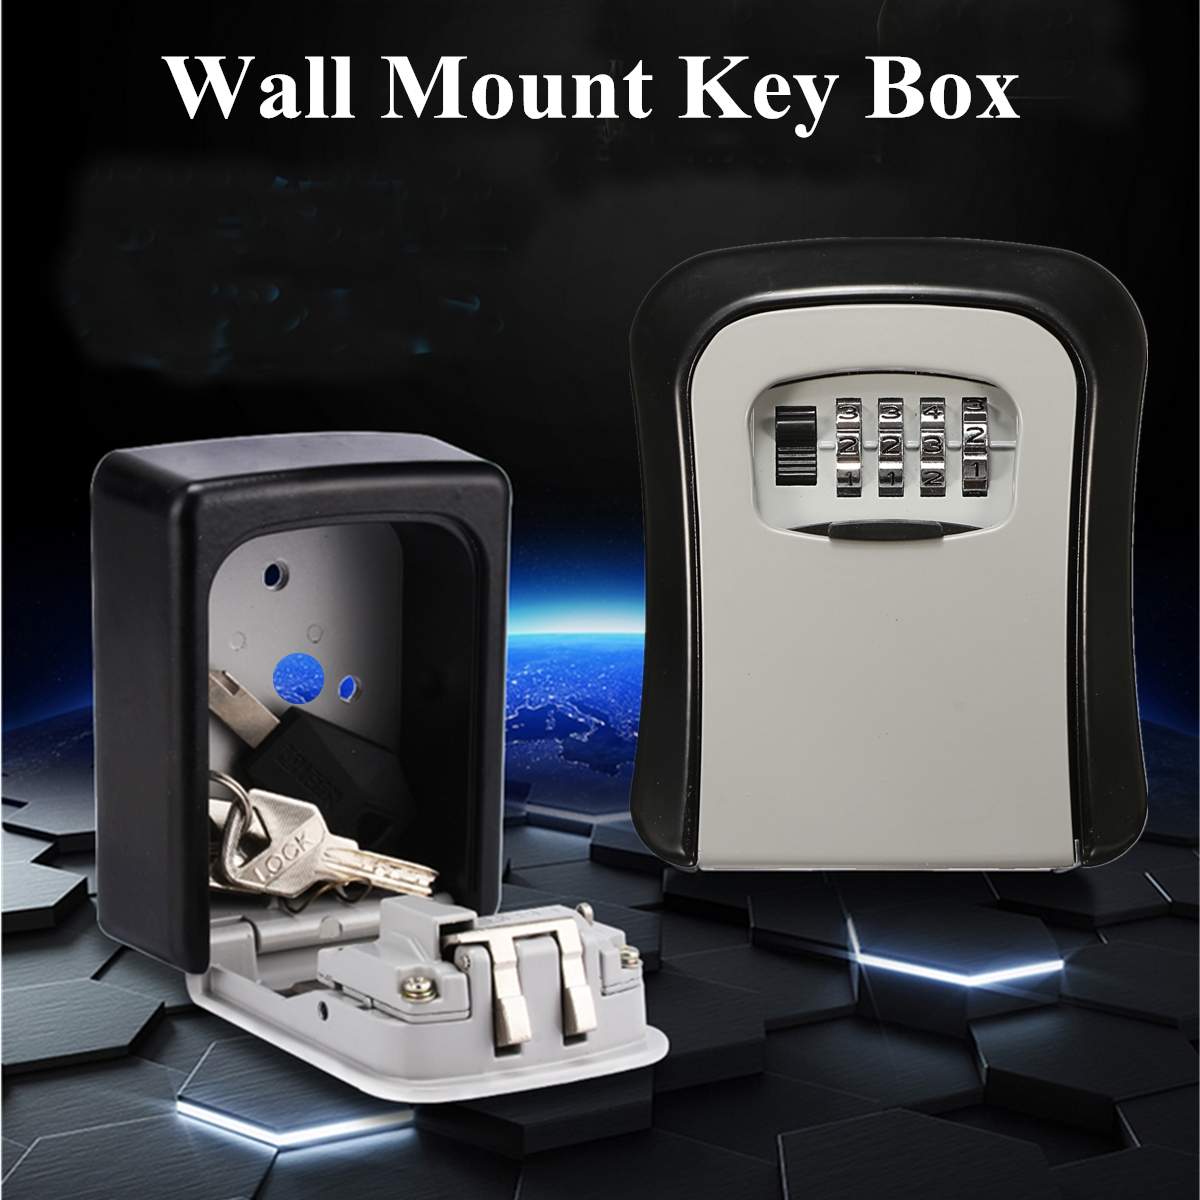 Wall-Mount-Key-Lock-Storage-Box-Security-Keyed-Door-Lock-with-4-Digit-Combination-Password-1205105-1